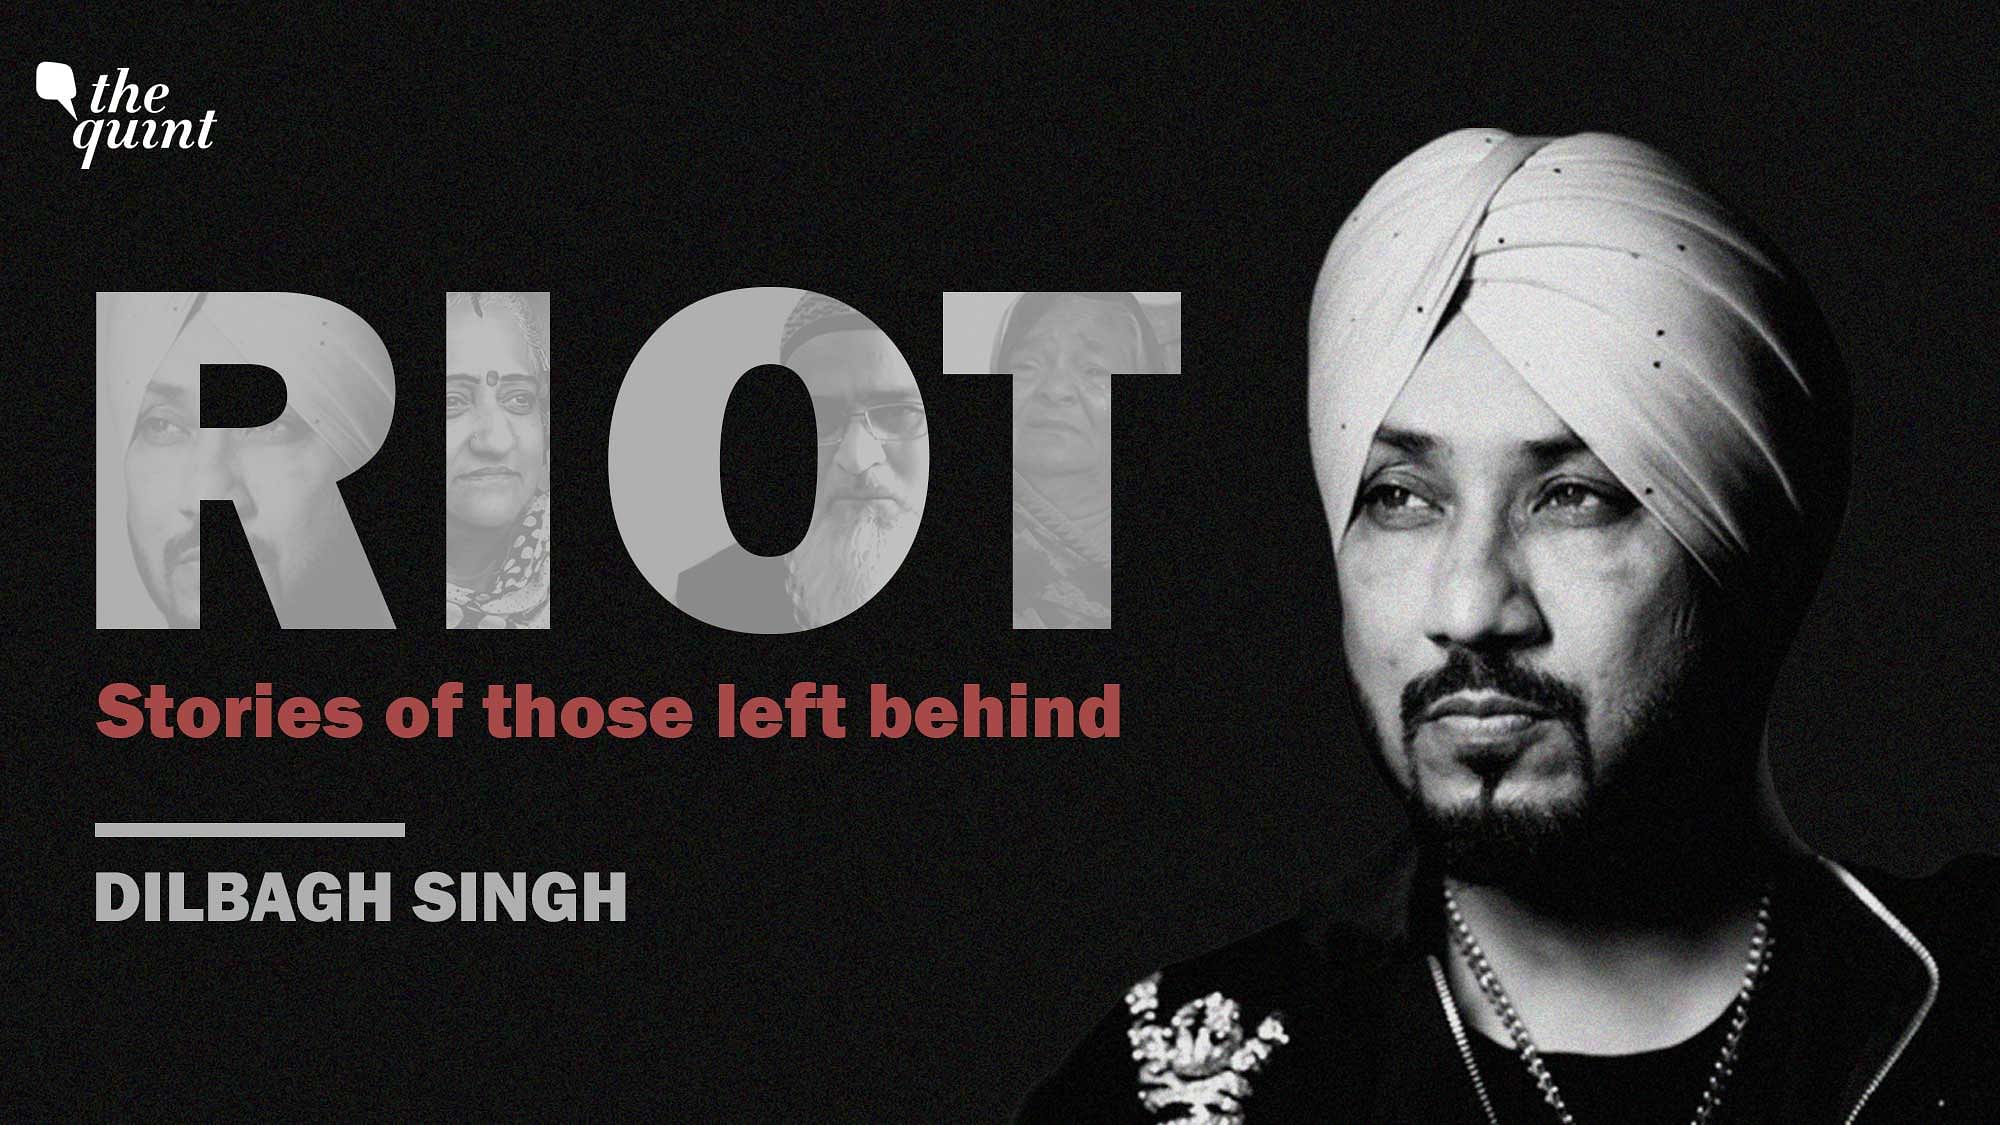 <div class="paragraphs"><p>Singer Dilbagh Singh survived the 1984 anti-Sikh riots.&nbsp;</p></div>